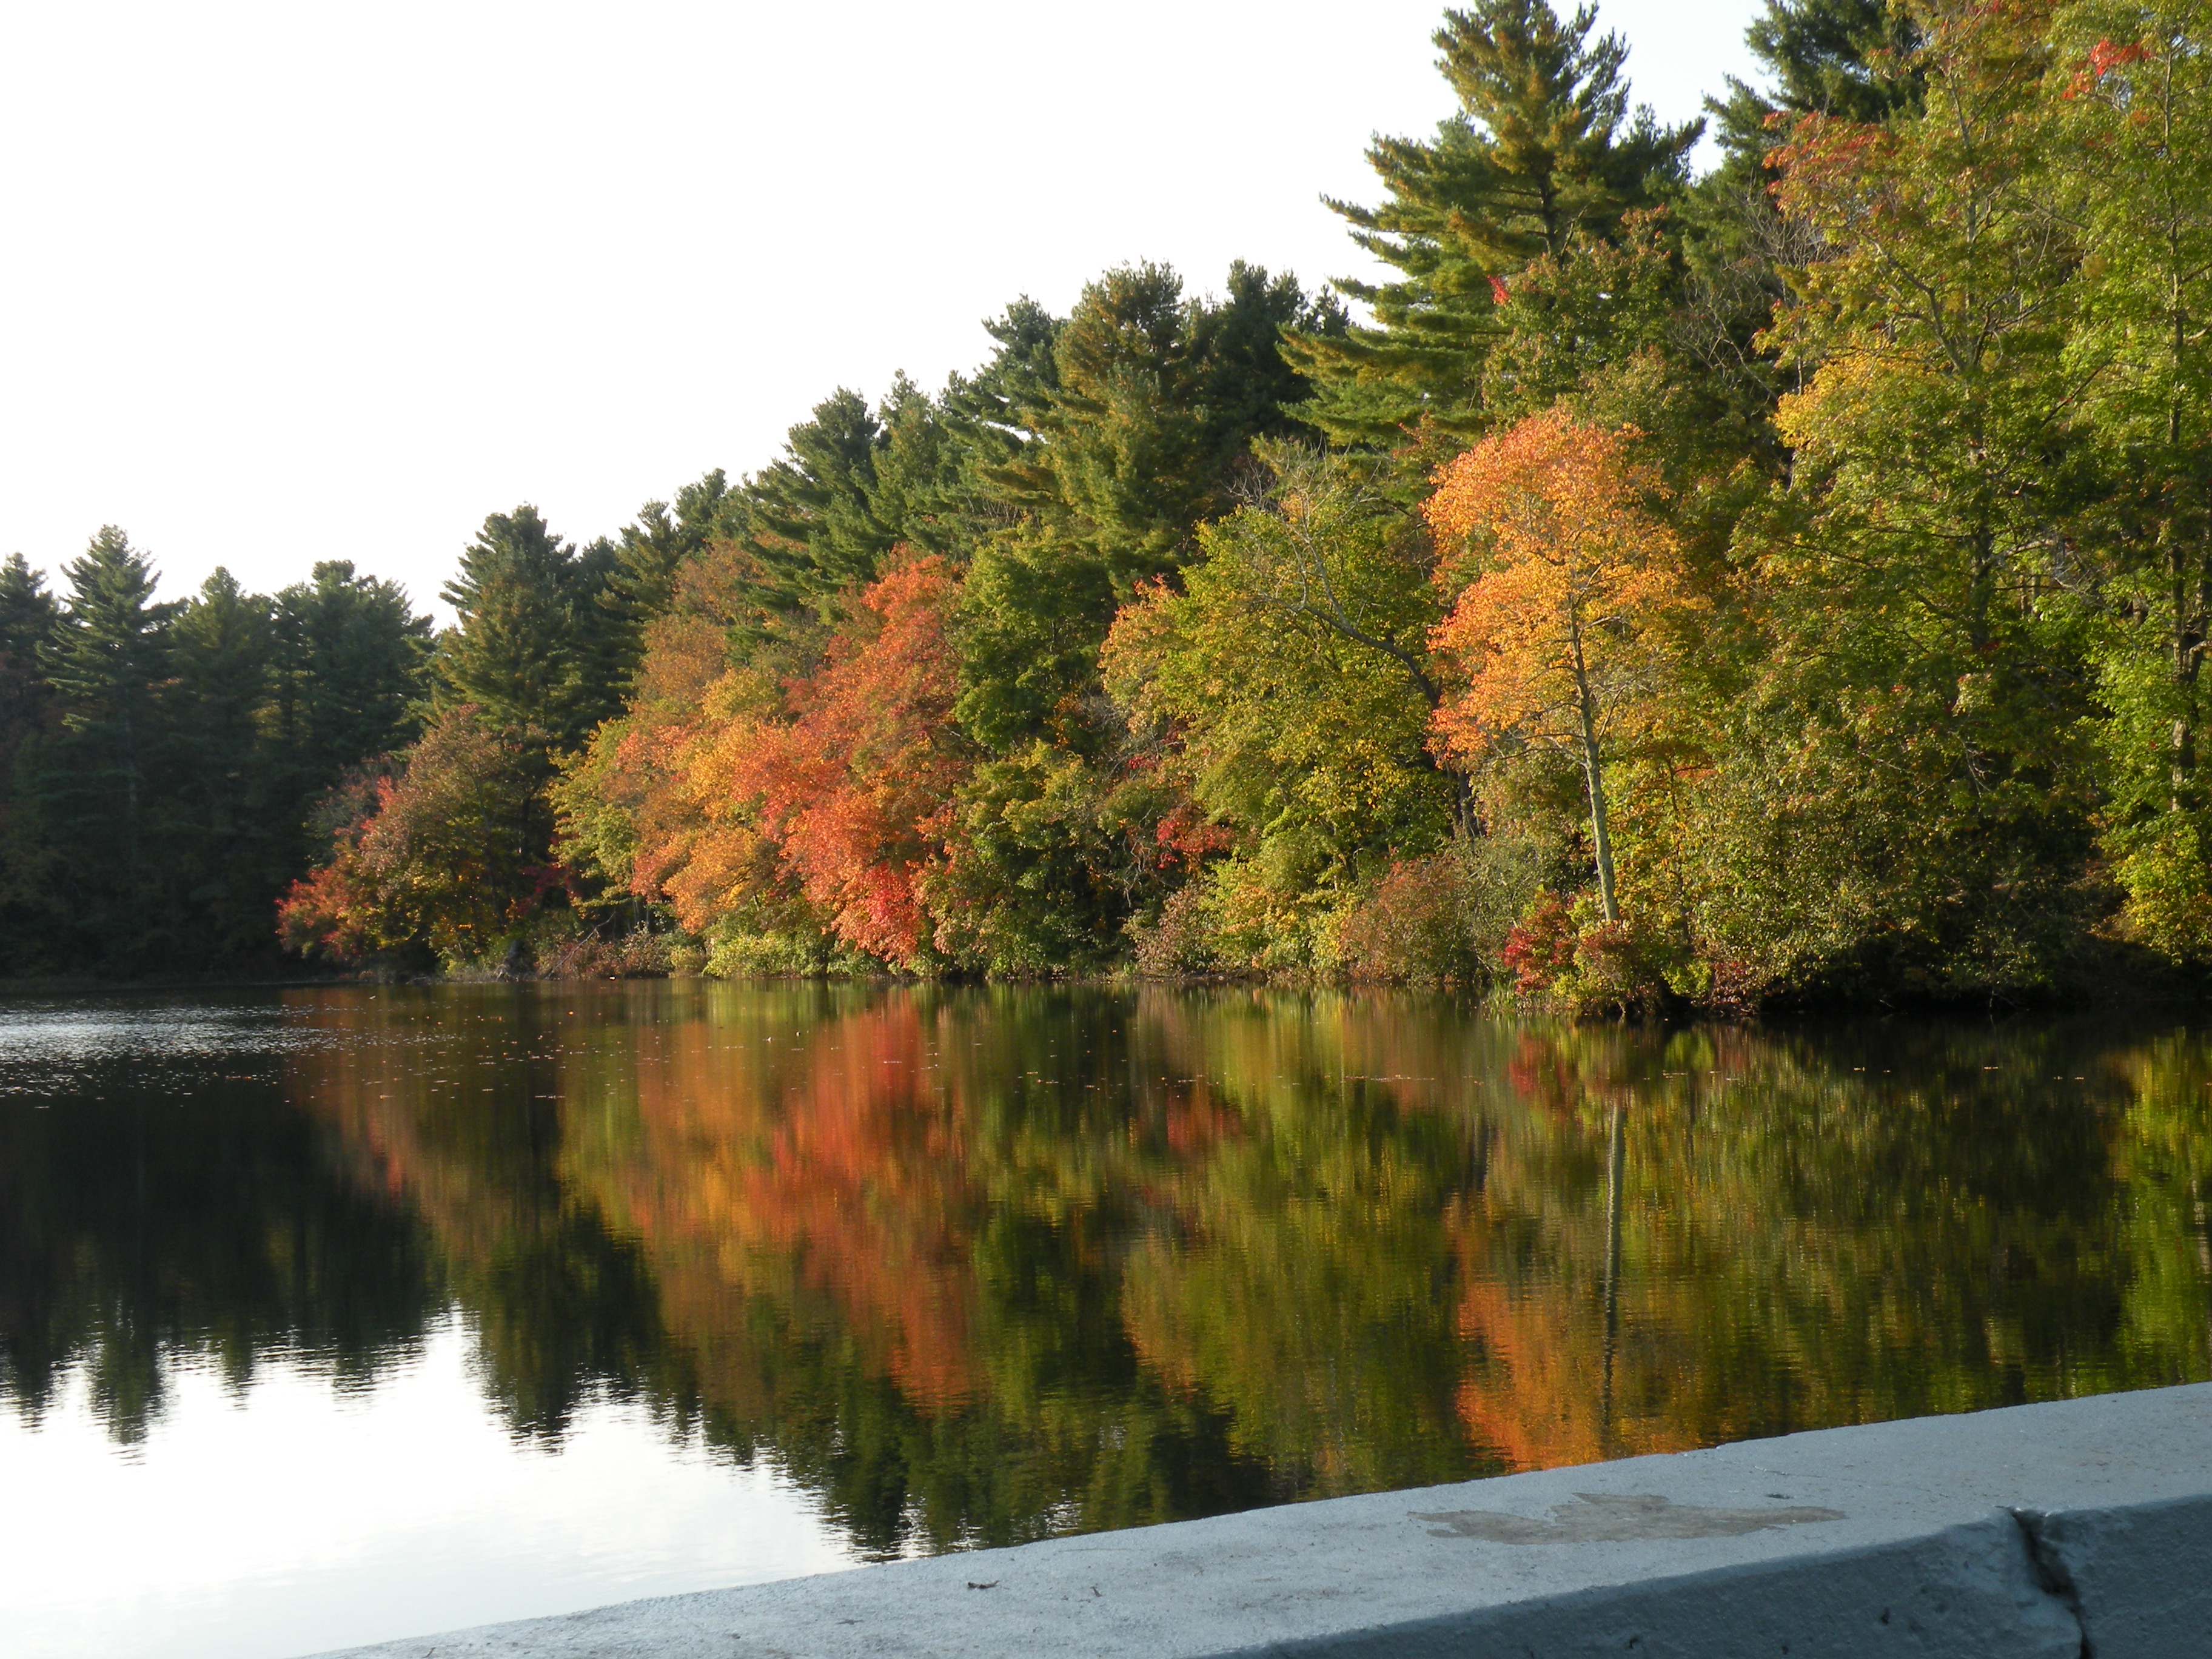 Fall Reflection October 5, 2013 (photo courtesy of Diane Hallett)